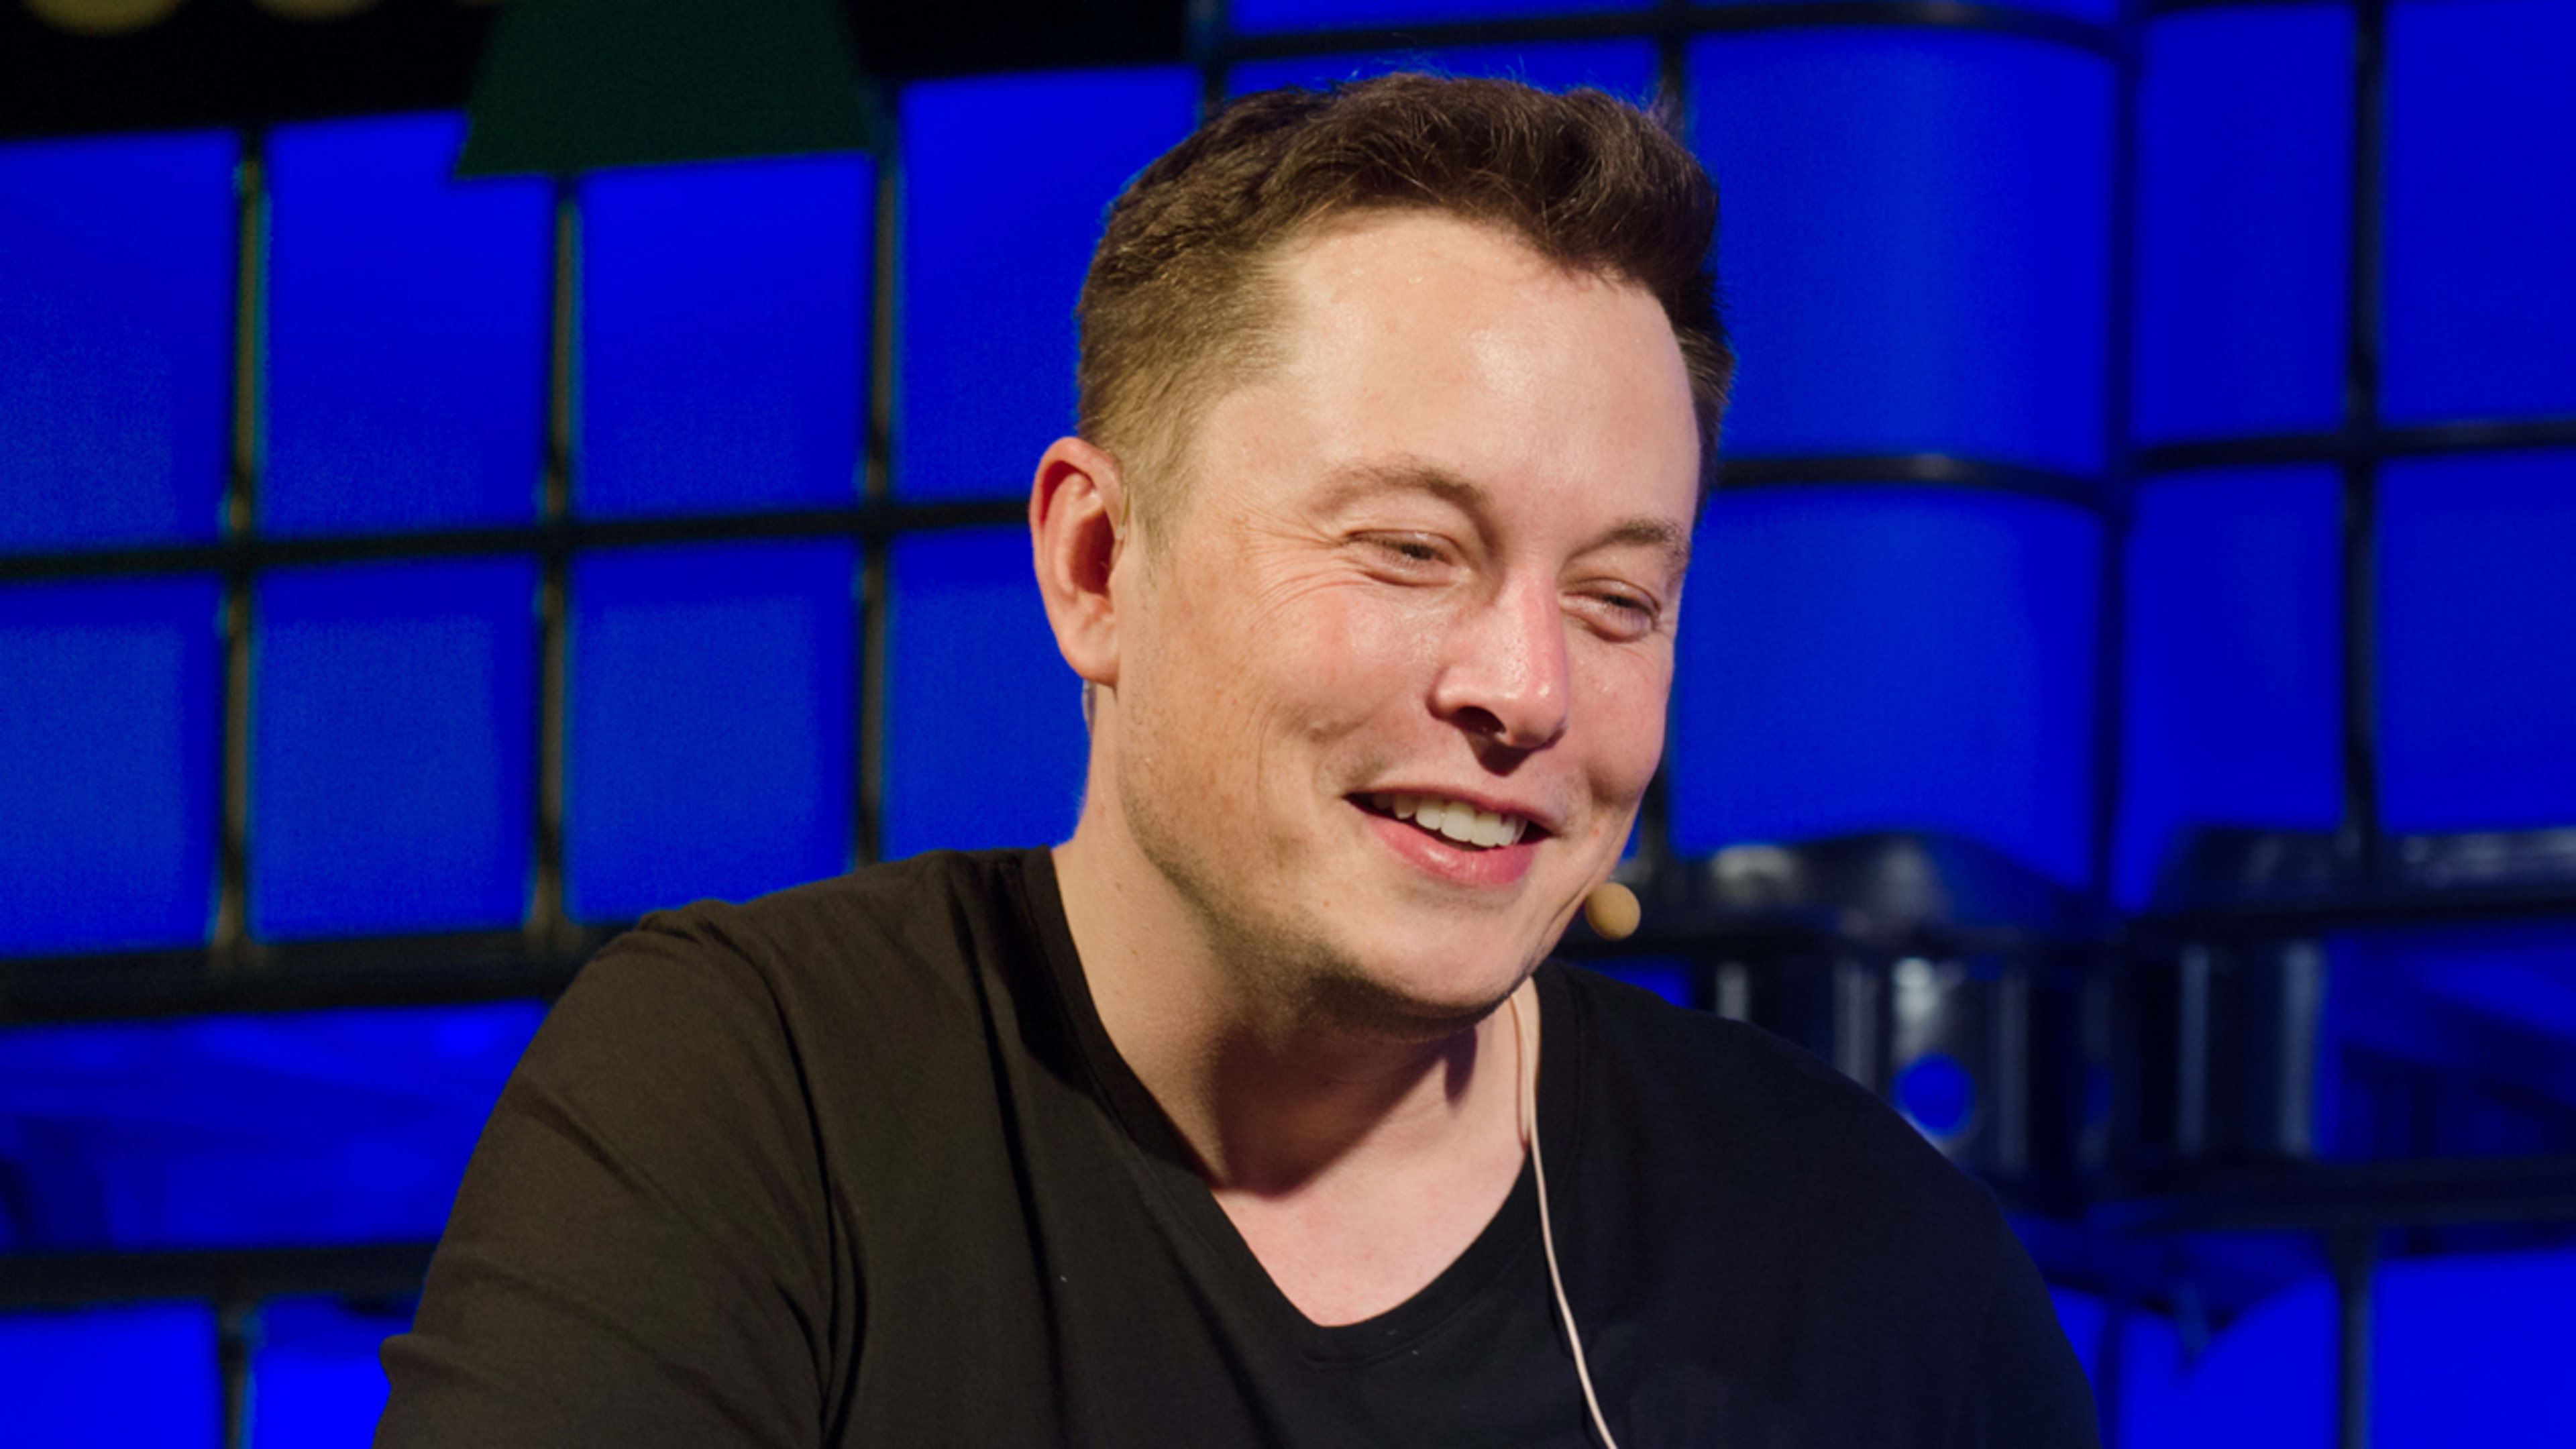 Elon Musk’s Boring Company will now sell “Lego-like” rocks